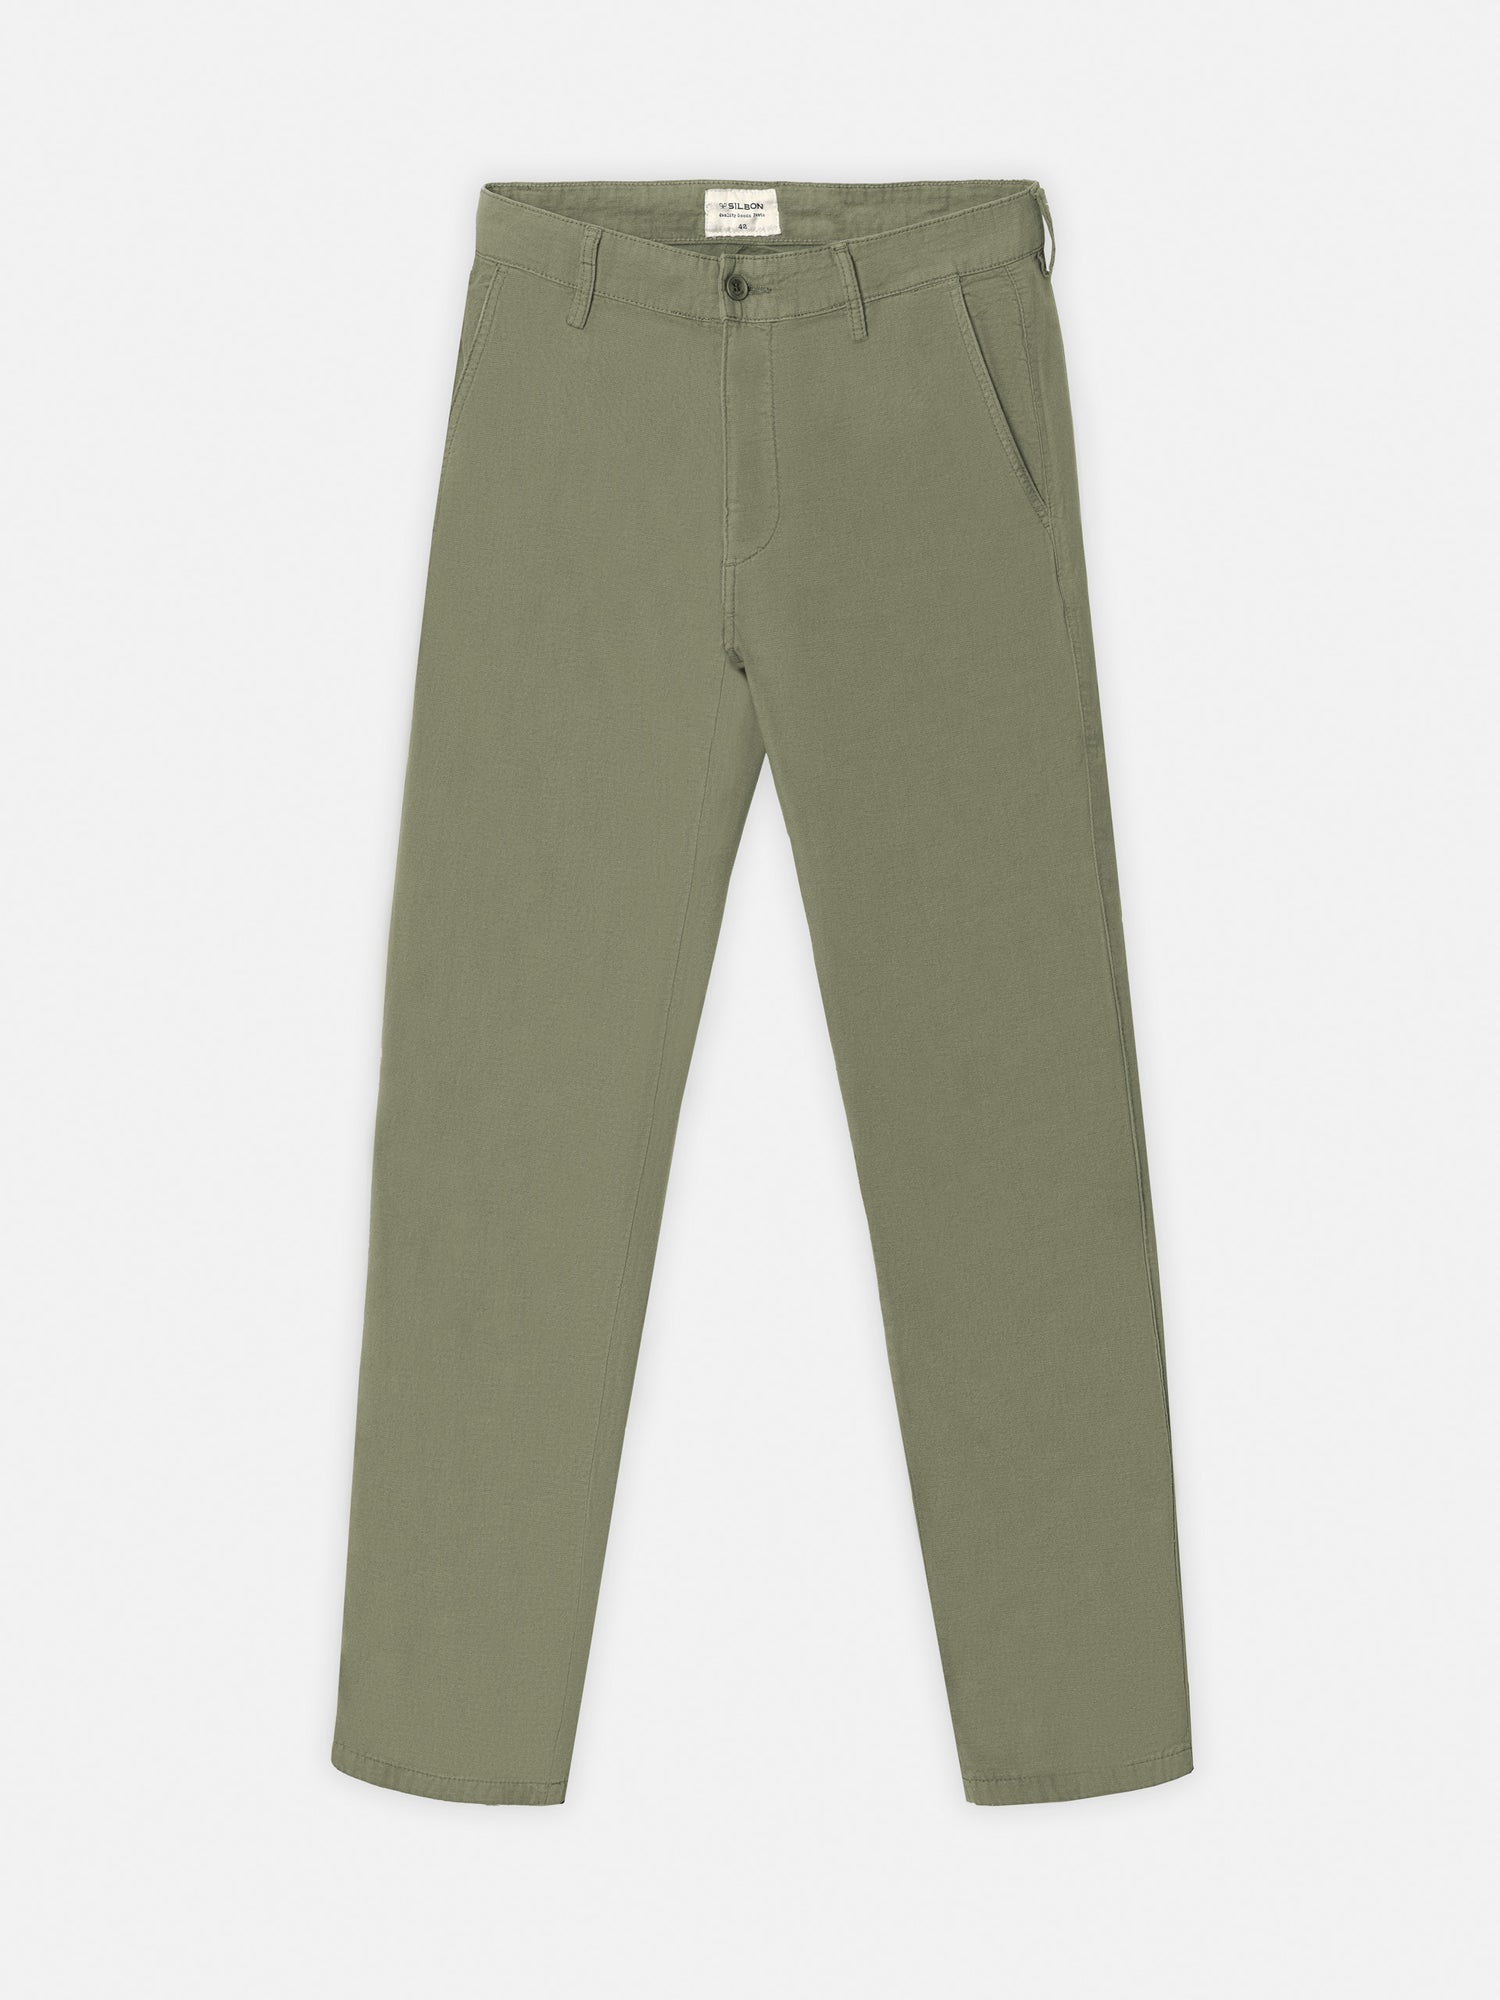 Pantalon sport chino lino verde